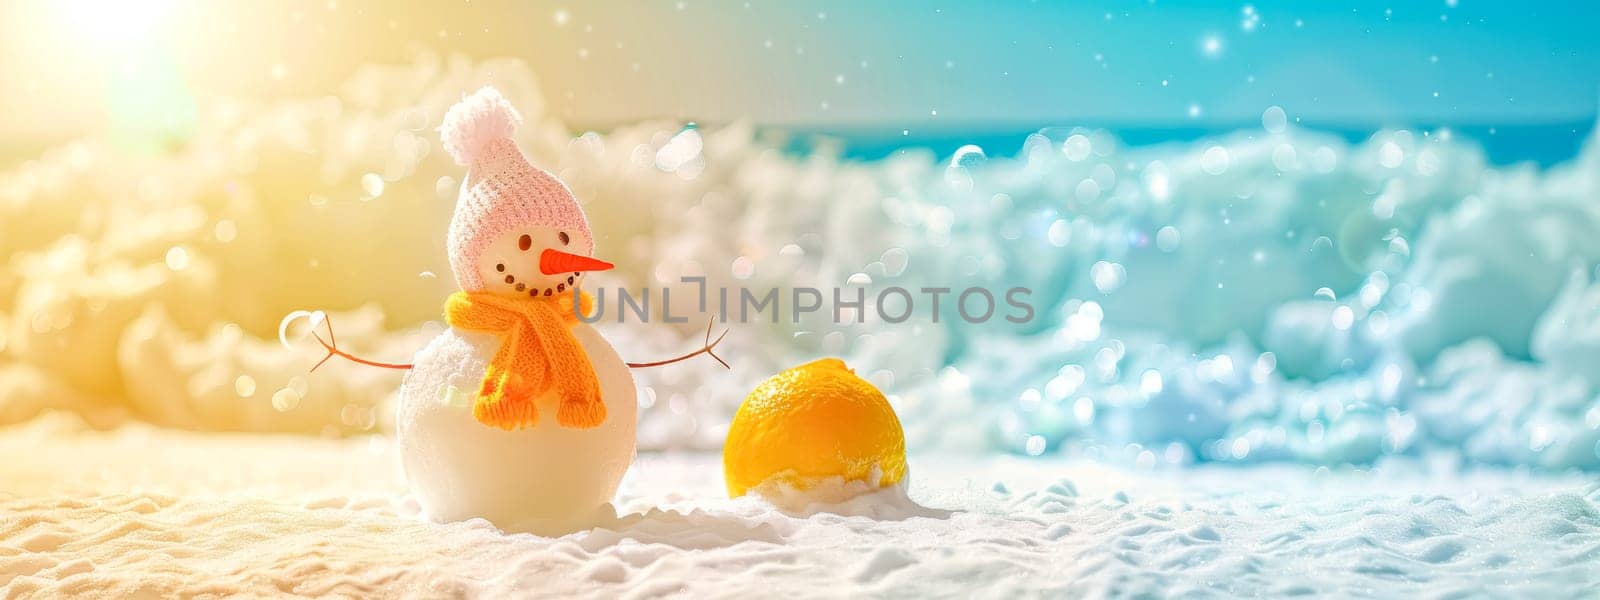 Winter fun: snowman and orange on sunny snowscape by Edophoto